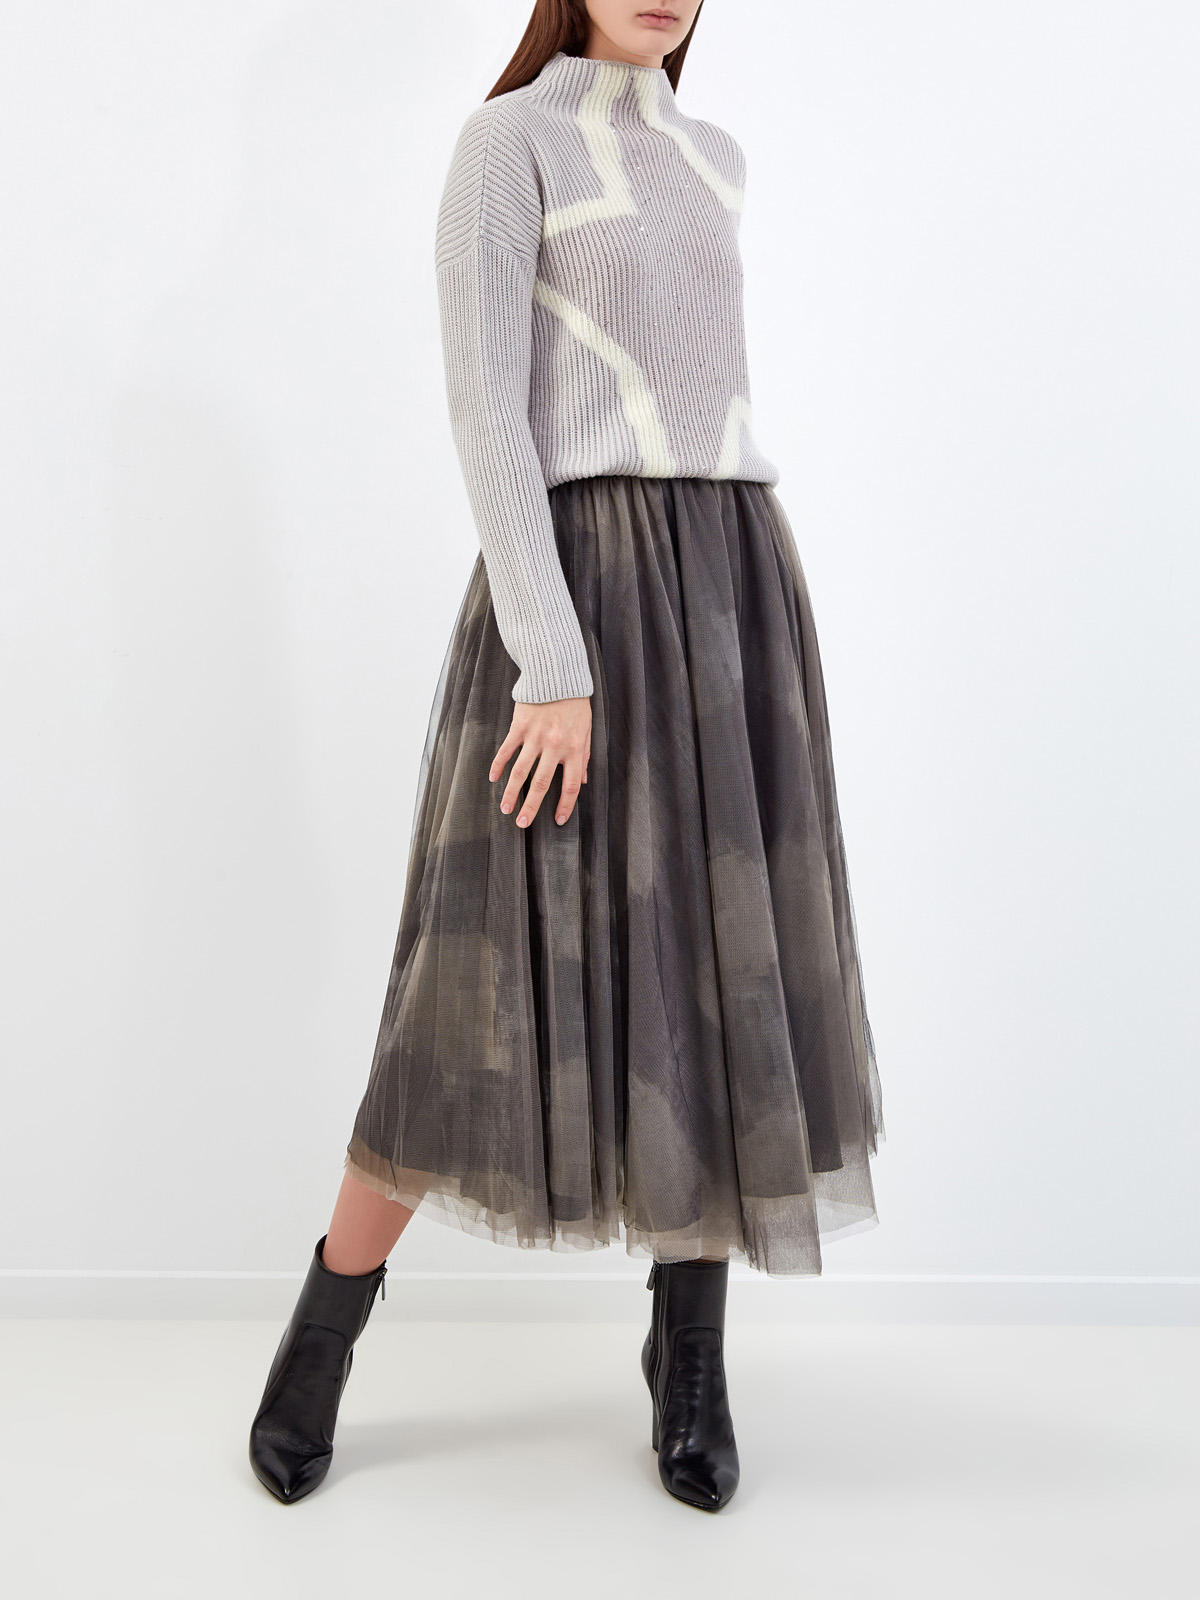 Джемпер из фактурной пряжи на основе шерсти и шелка LORENA ANTONIAZZI, цвет бежевый, размер 38;40;46 - фото 2